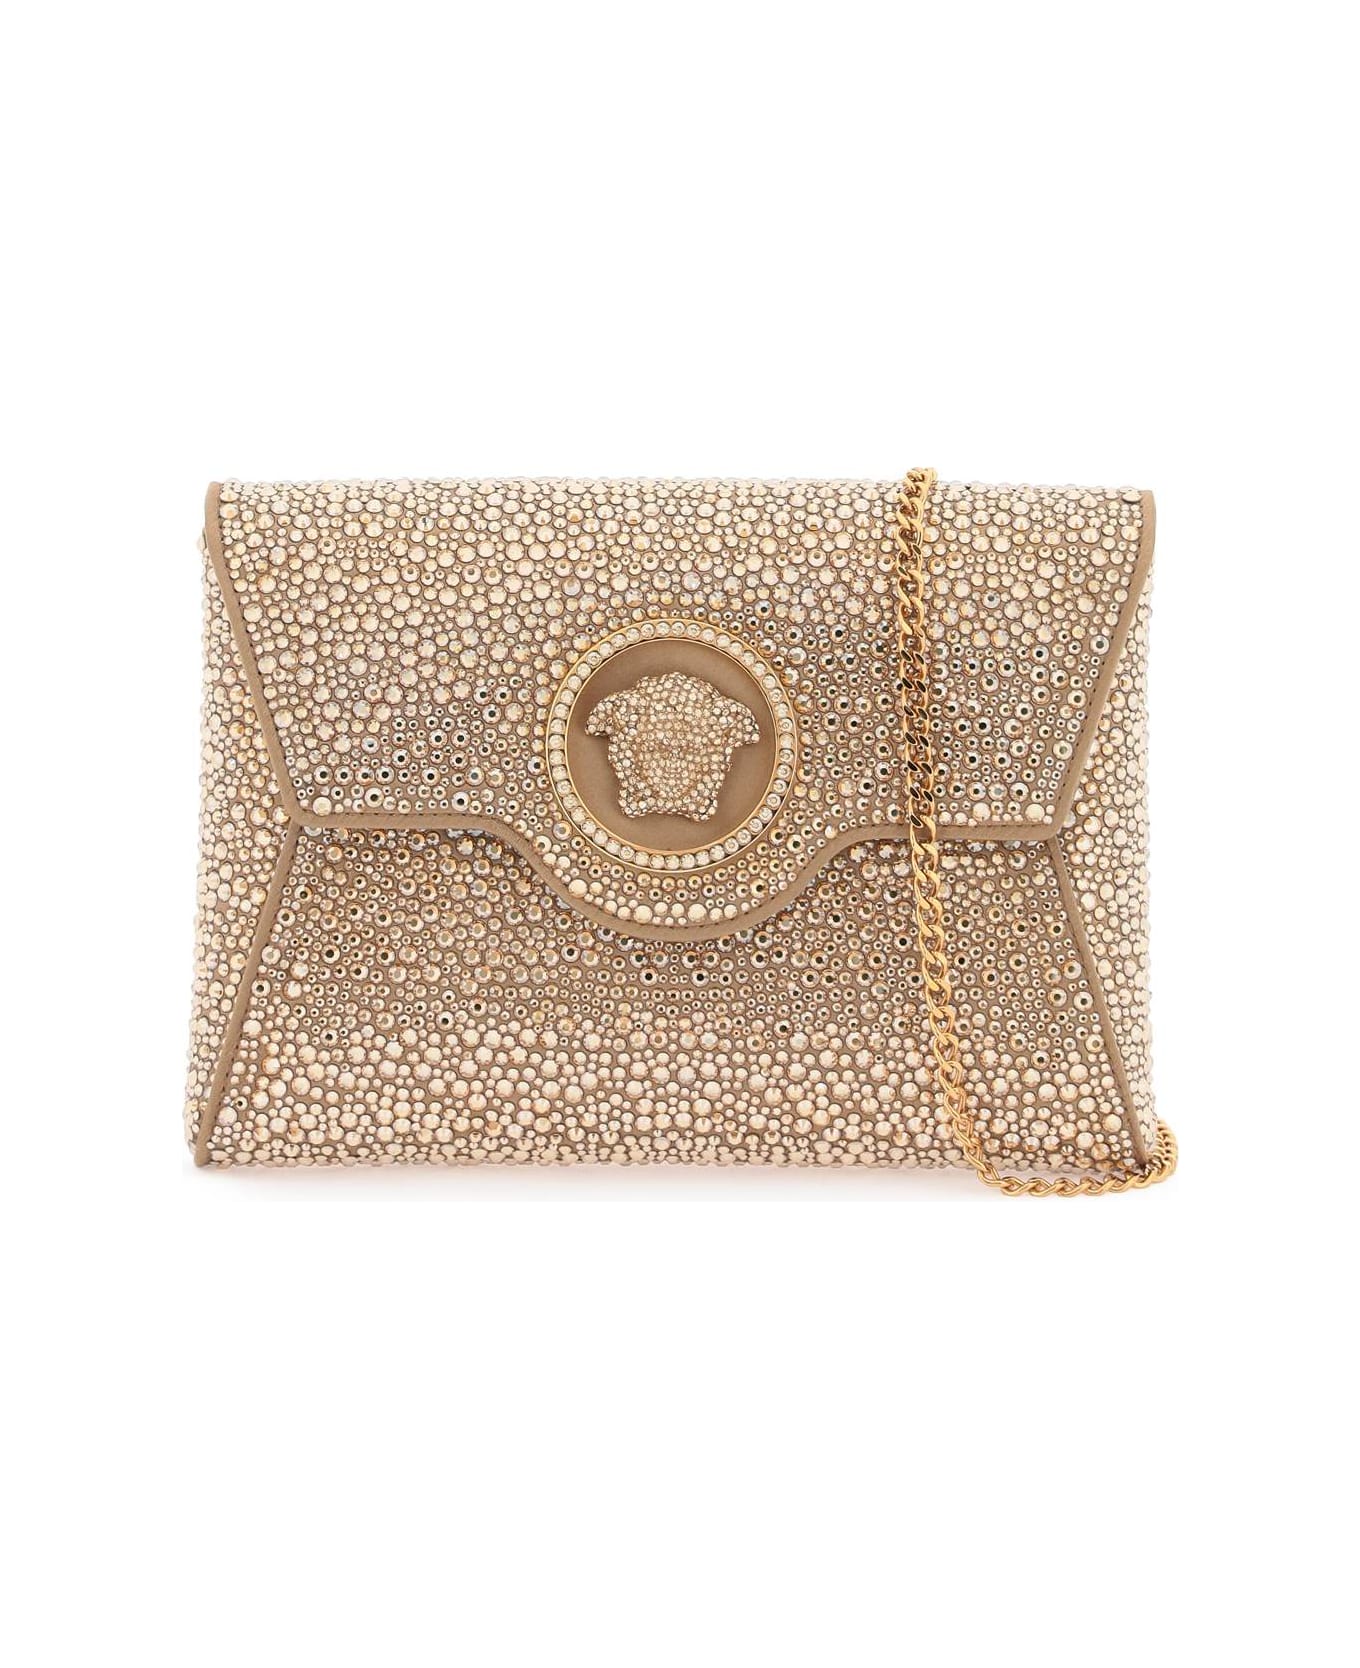 Versace La Medusa Envelope Clutch With Crystals - CAMEL VERSACE GOLD (Beige)